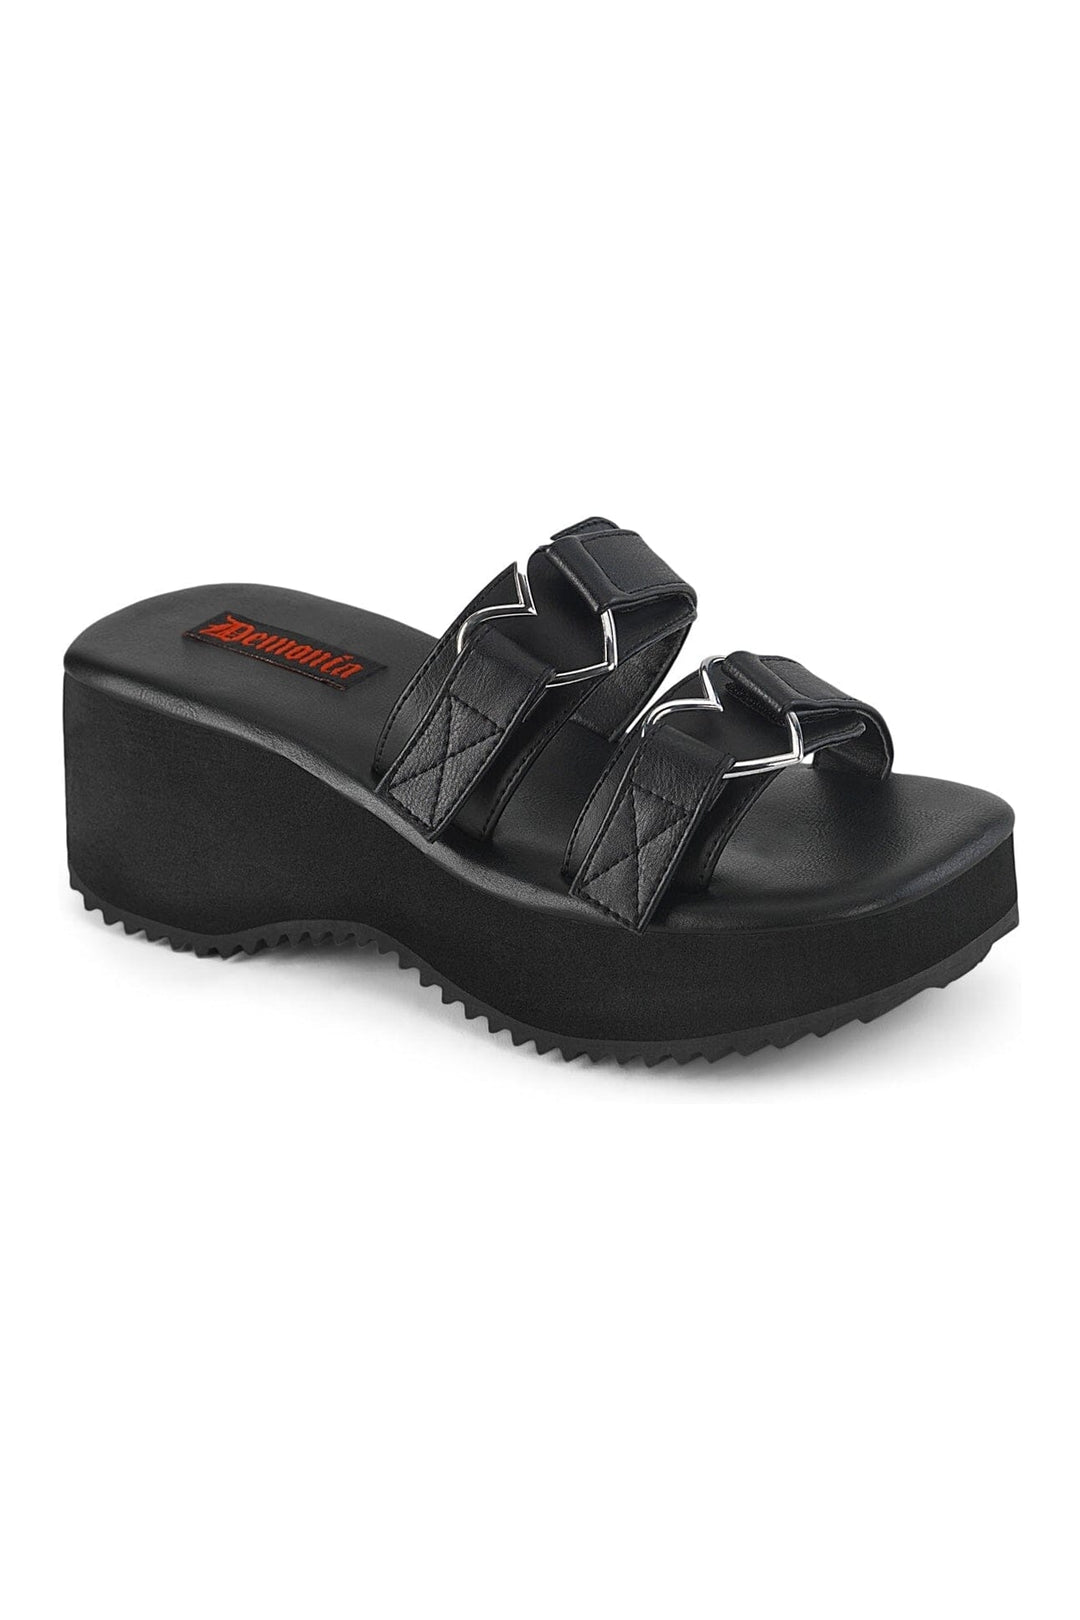 FLIP-12 Black Vegan Leather Slide-Slides-Demonia-Black-10-Vegan Leather-SEXYSHOES.COM